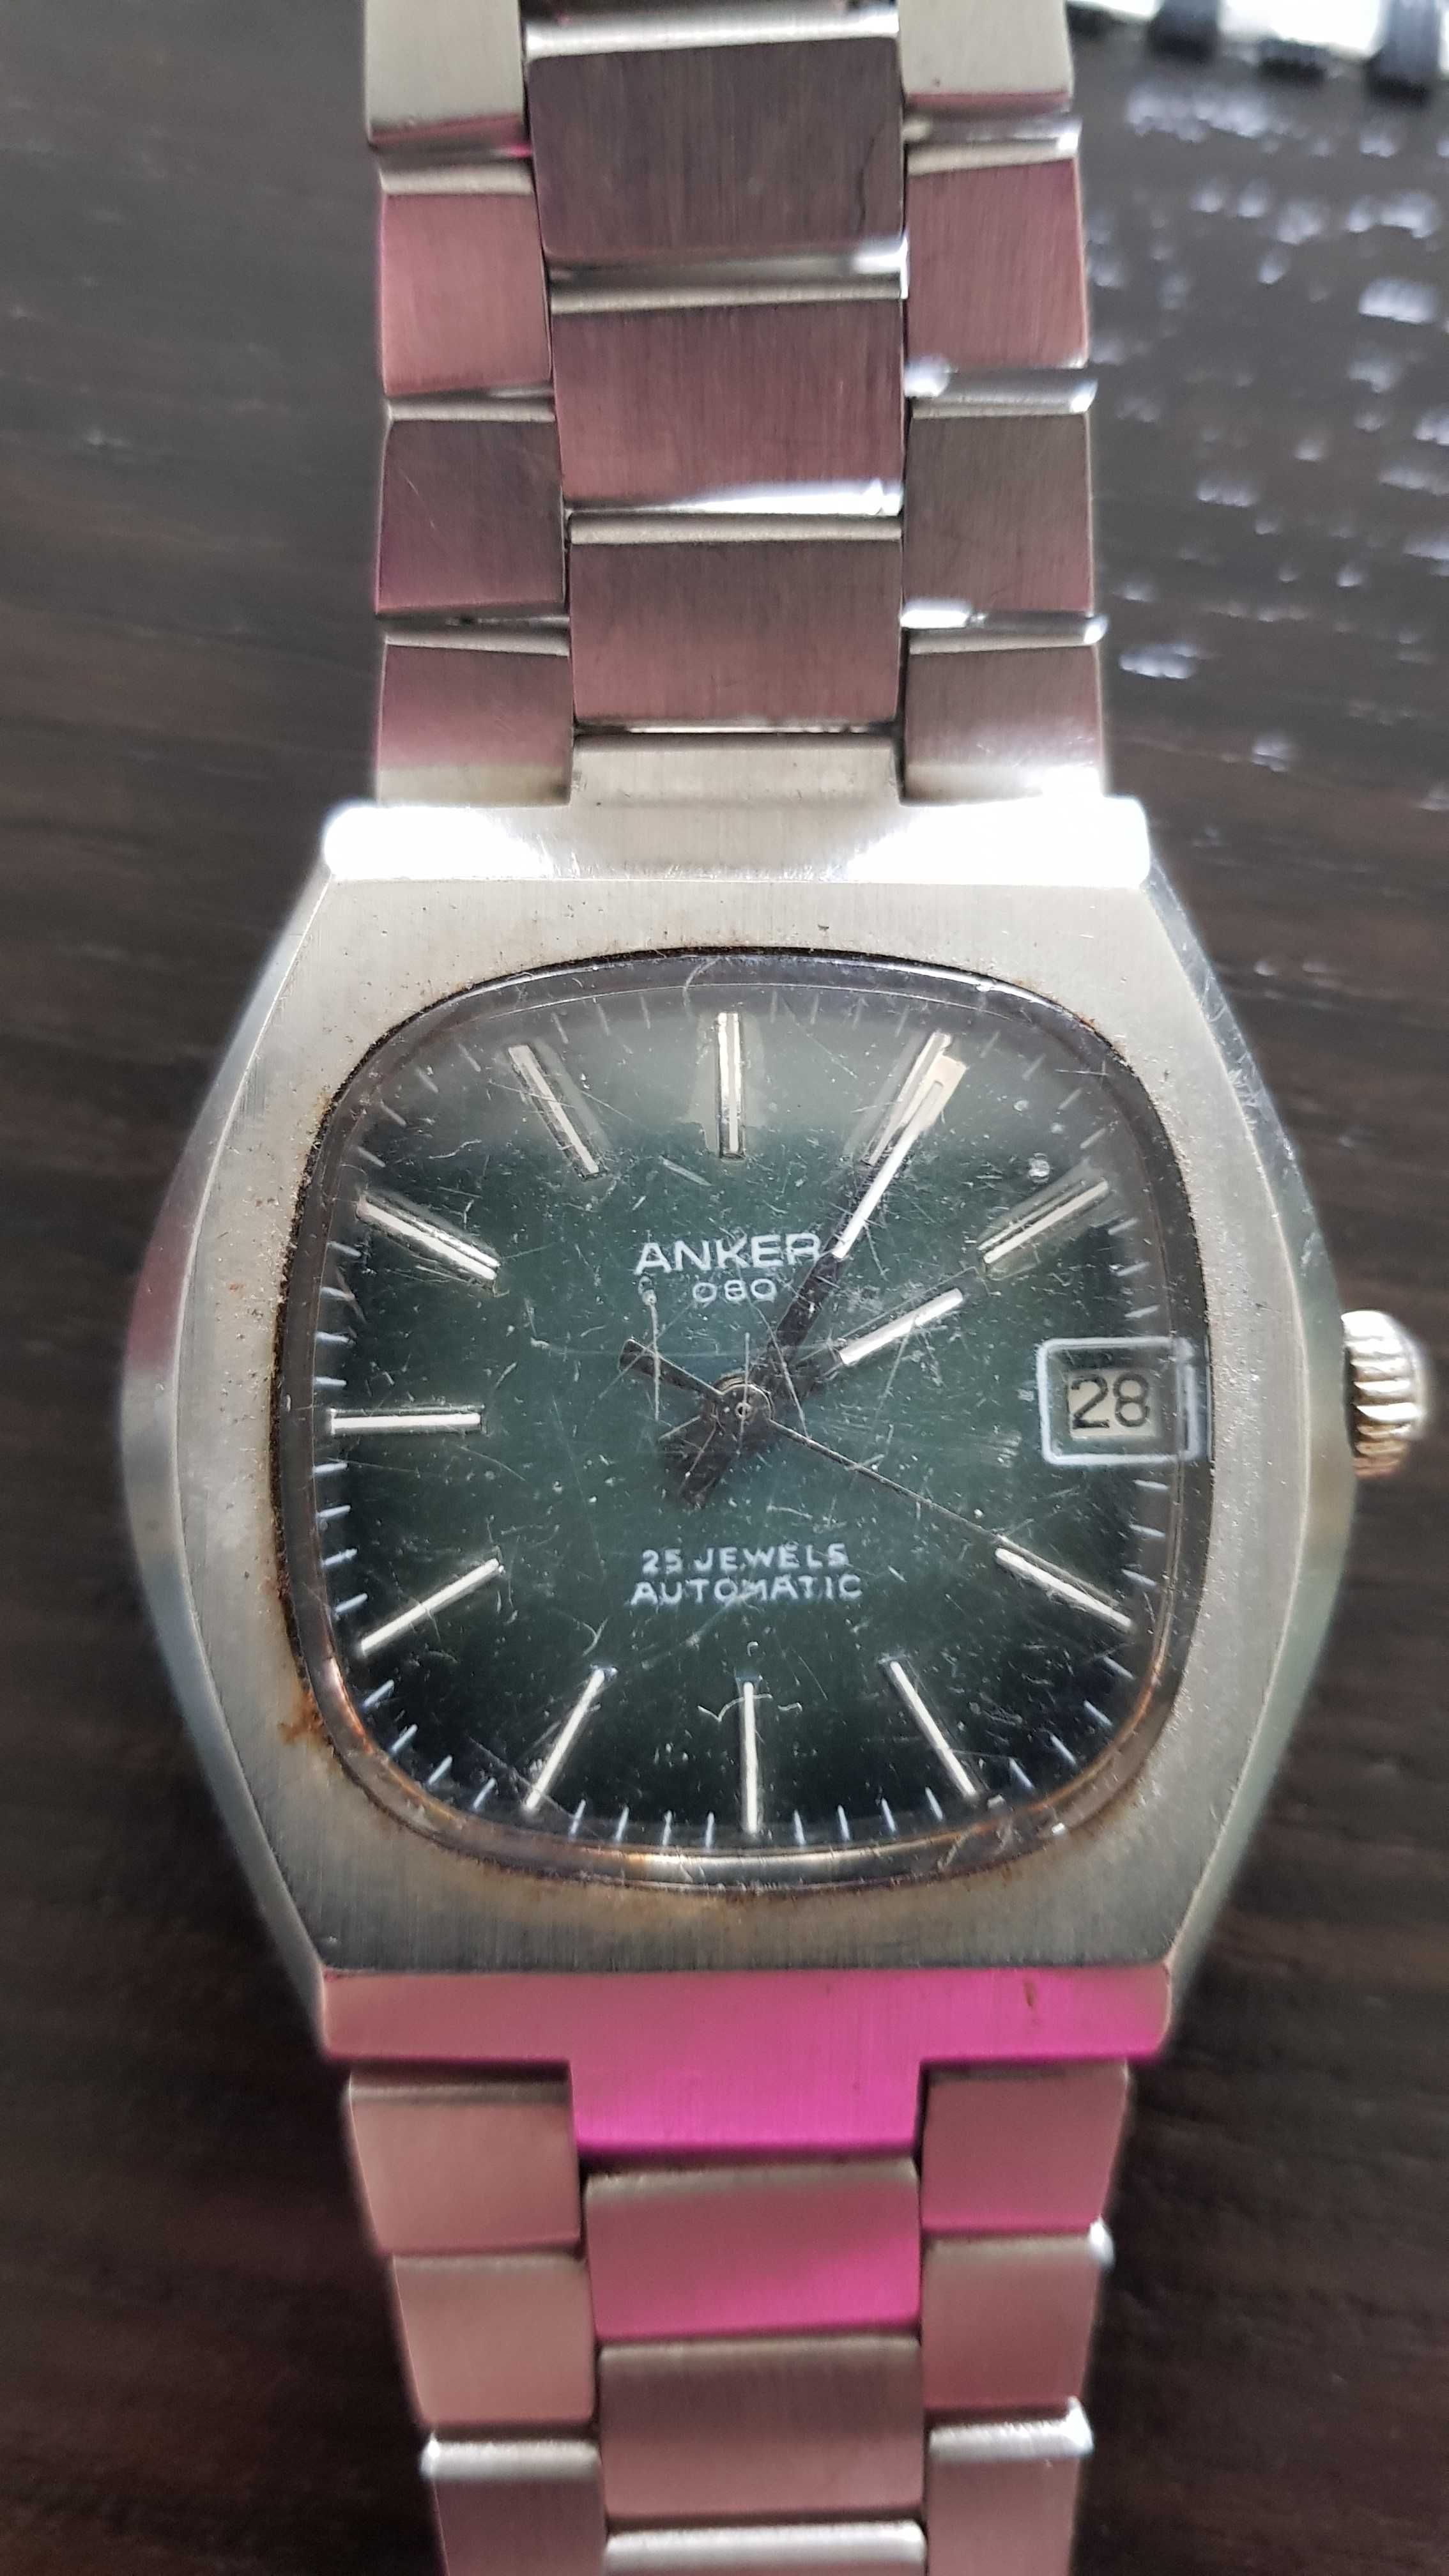 Zegarek Anker automatic 25 jewels 1970/79